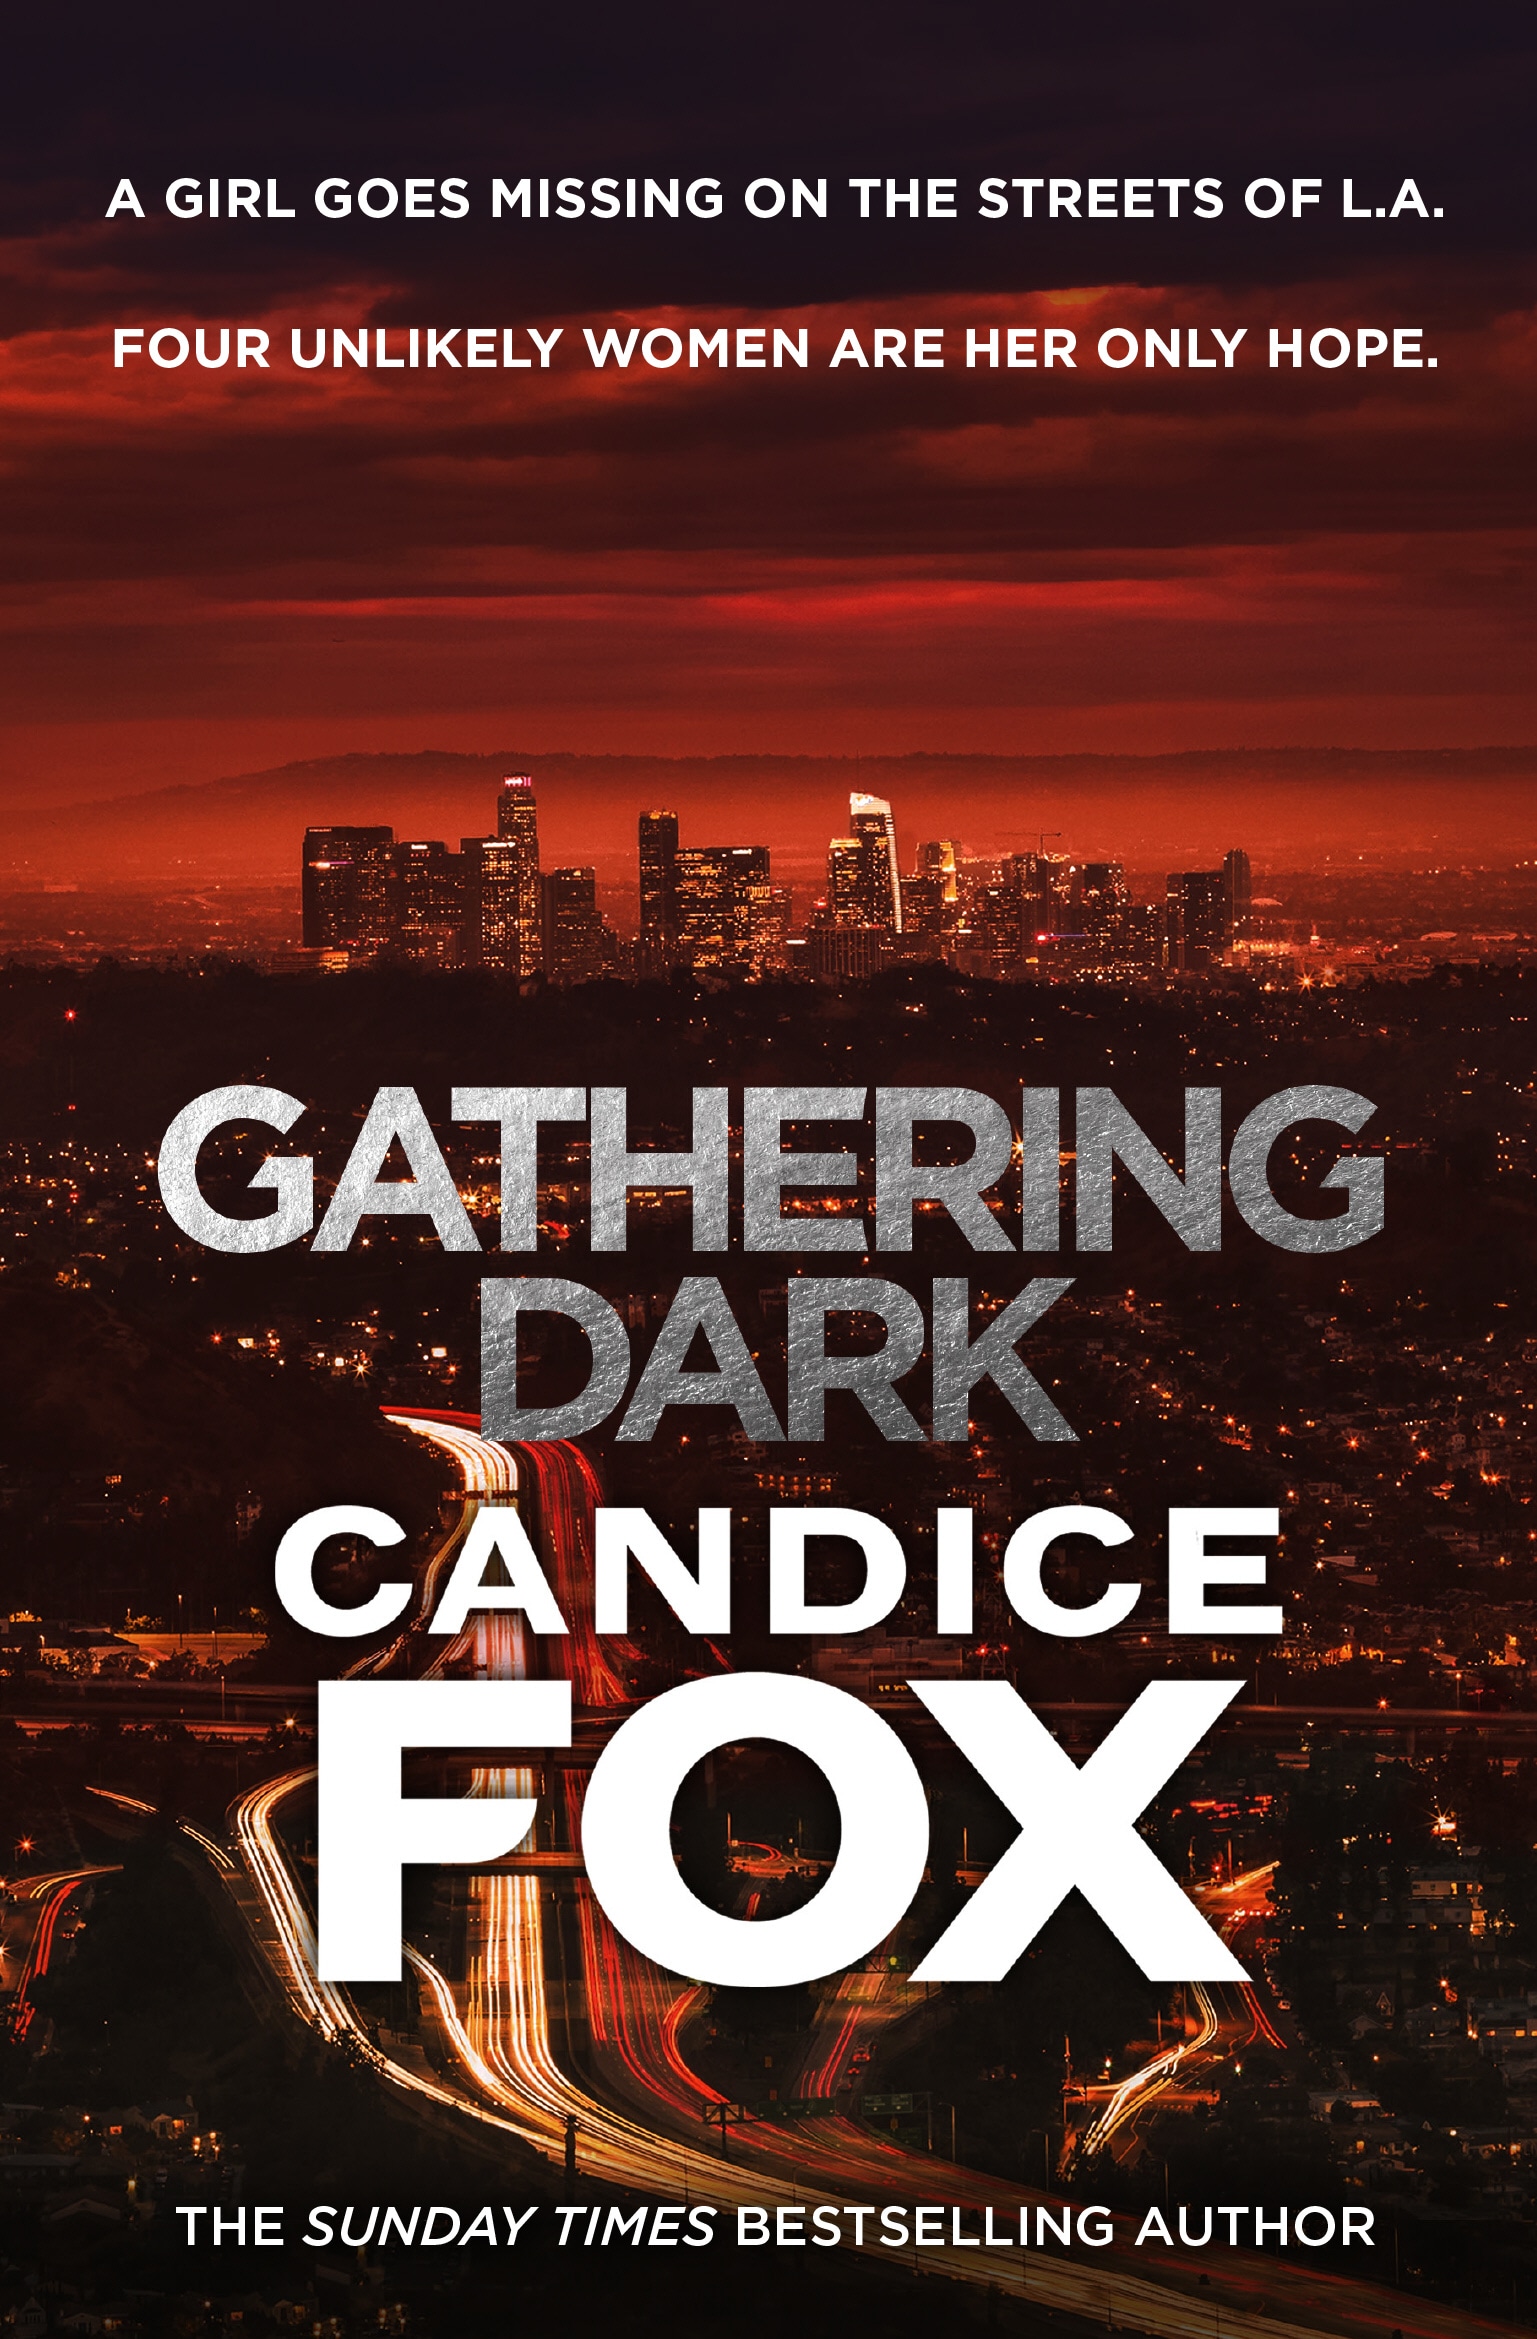 Book “Gathering Dark” by Candice Fox — September 3, 2020